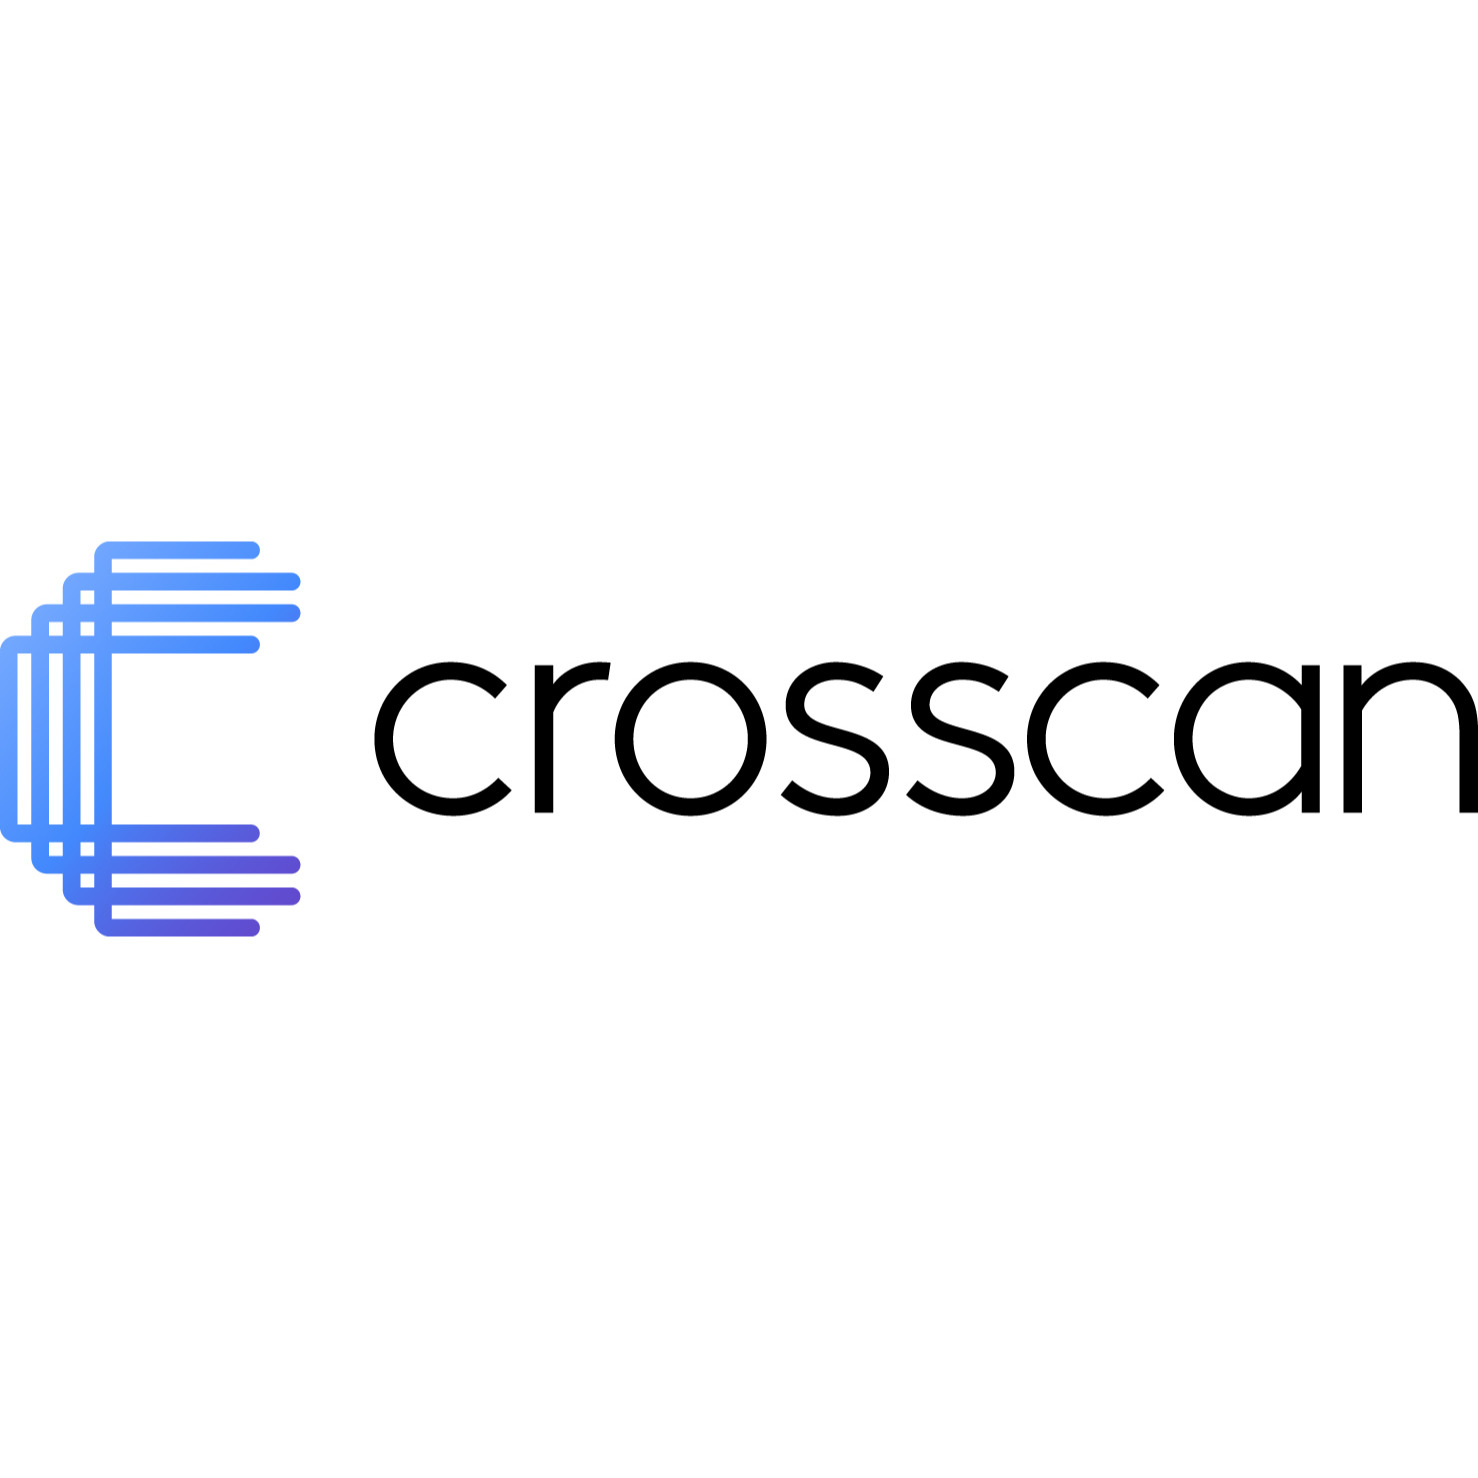 Logo Crosscan horizontal